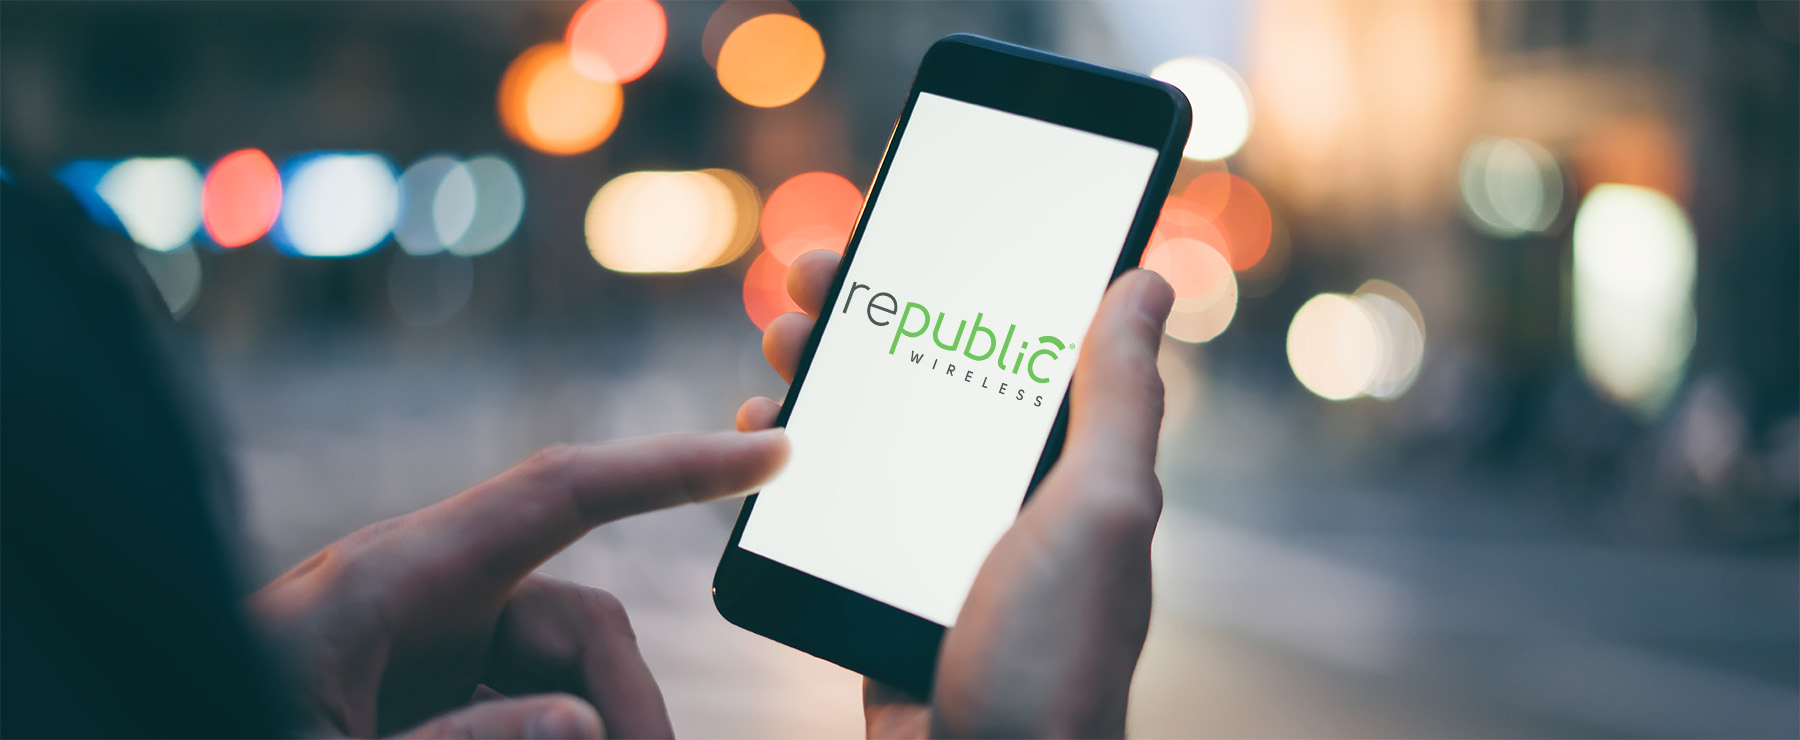 Republic Wireless Mobile Phone Plans